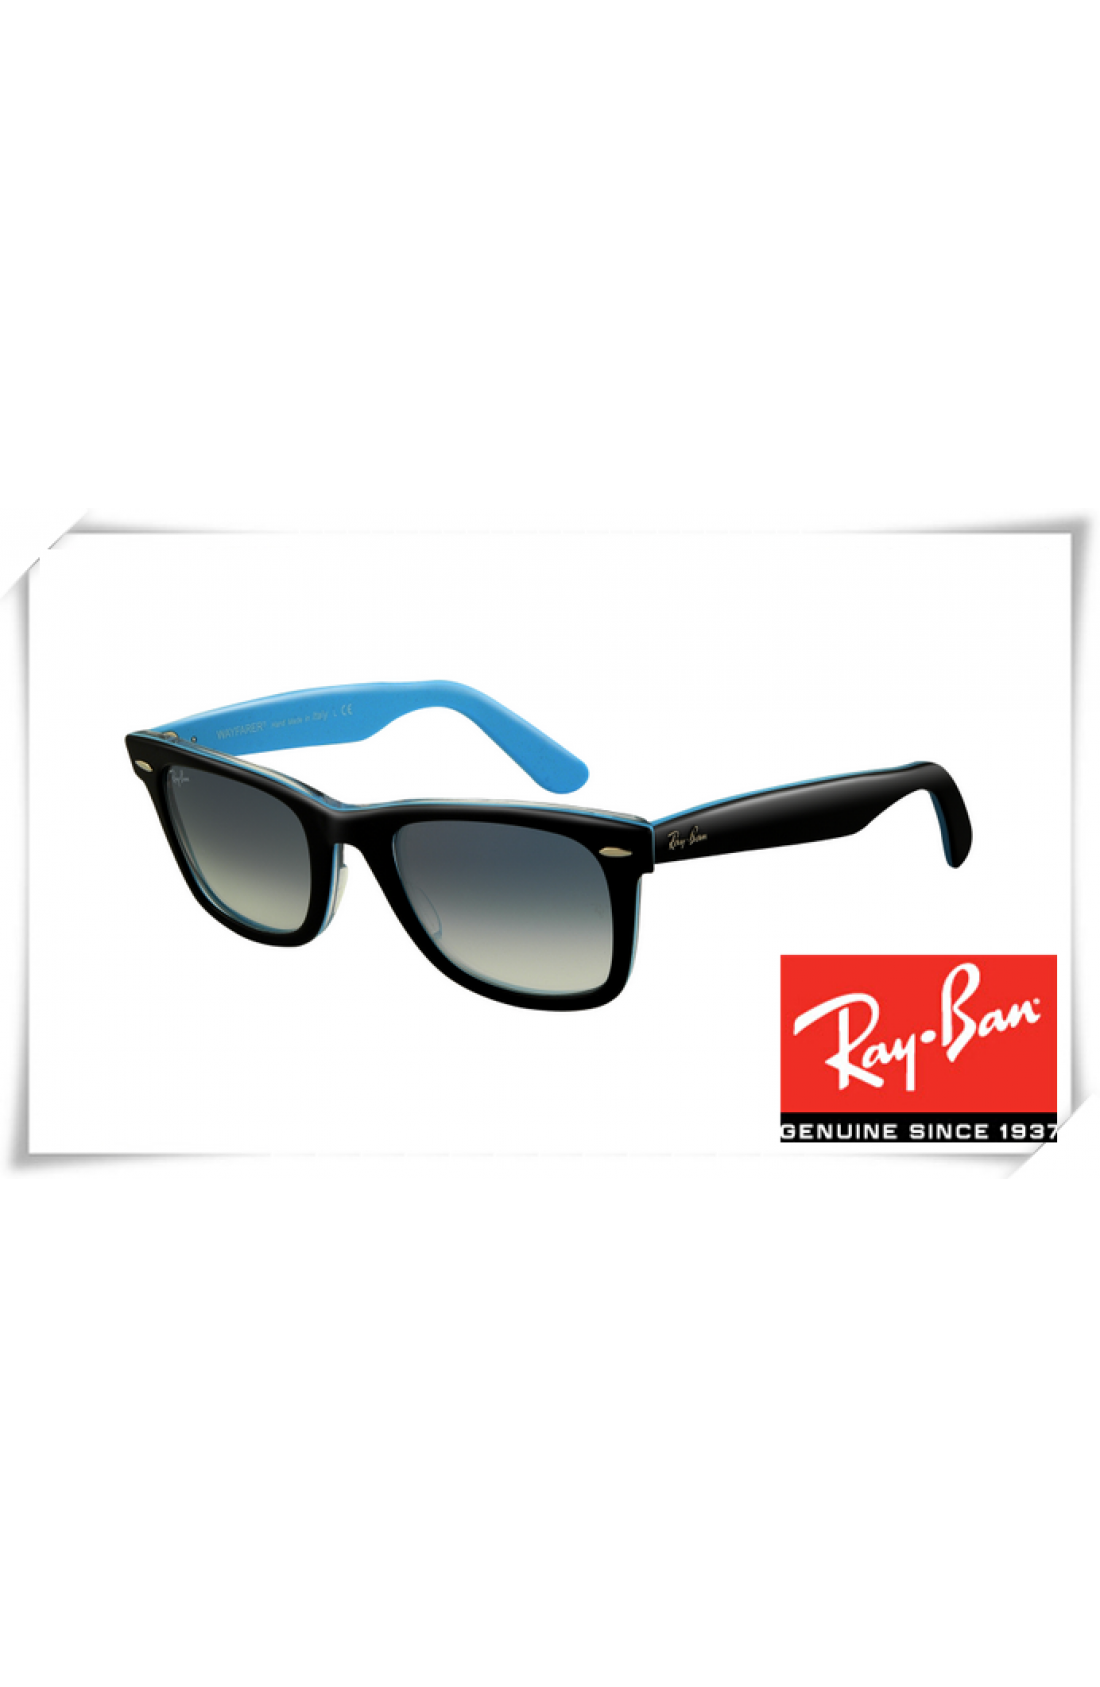 ray ban sunglasses light blue frame